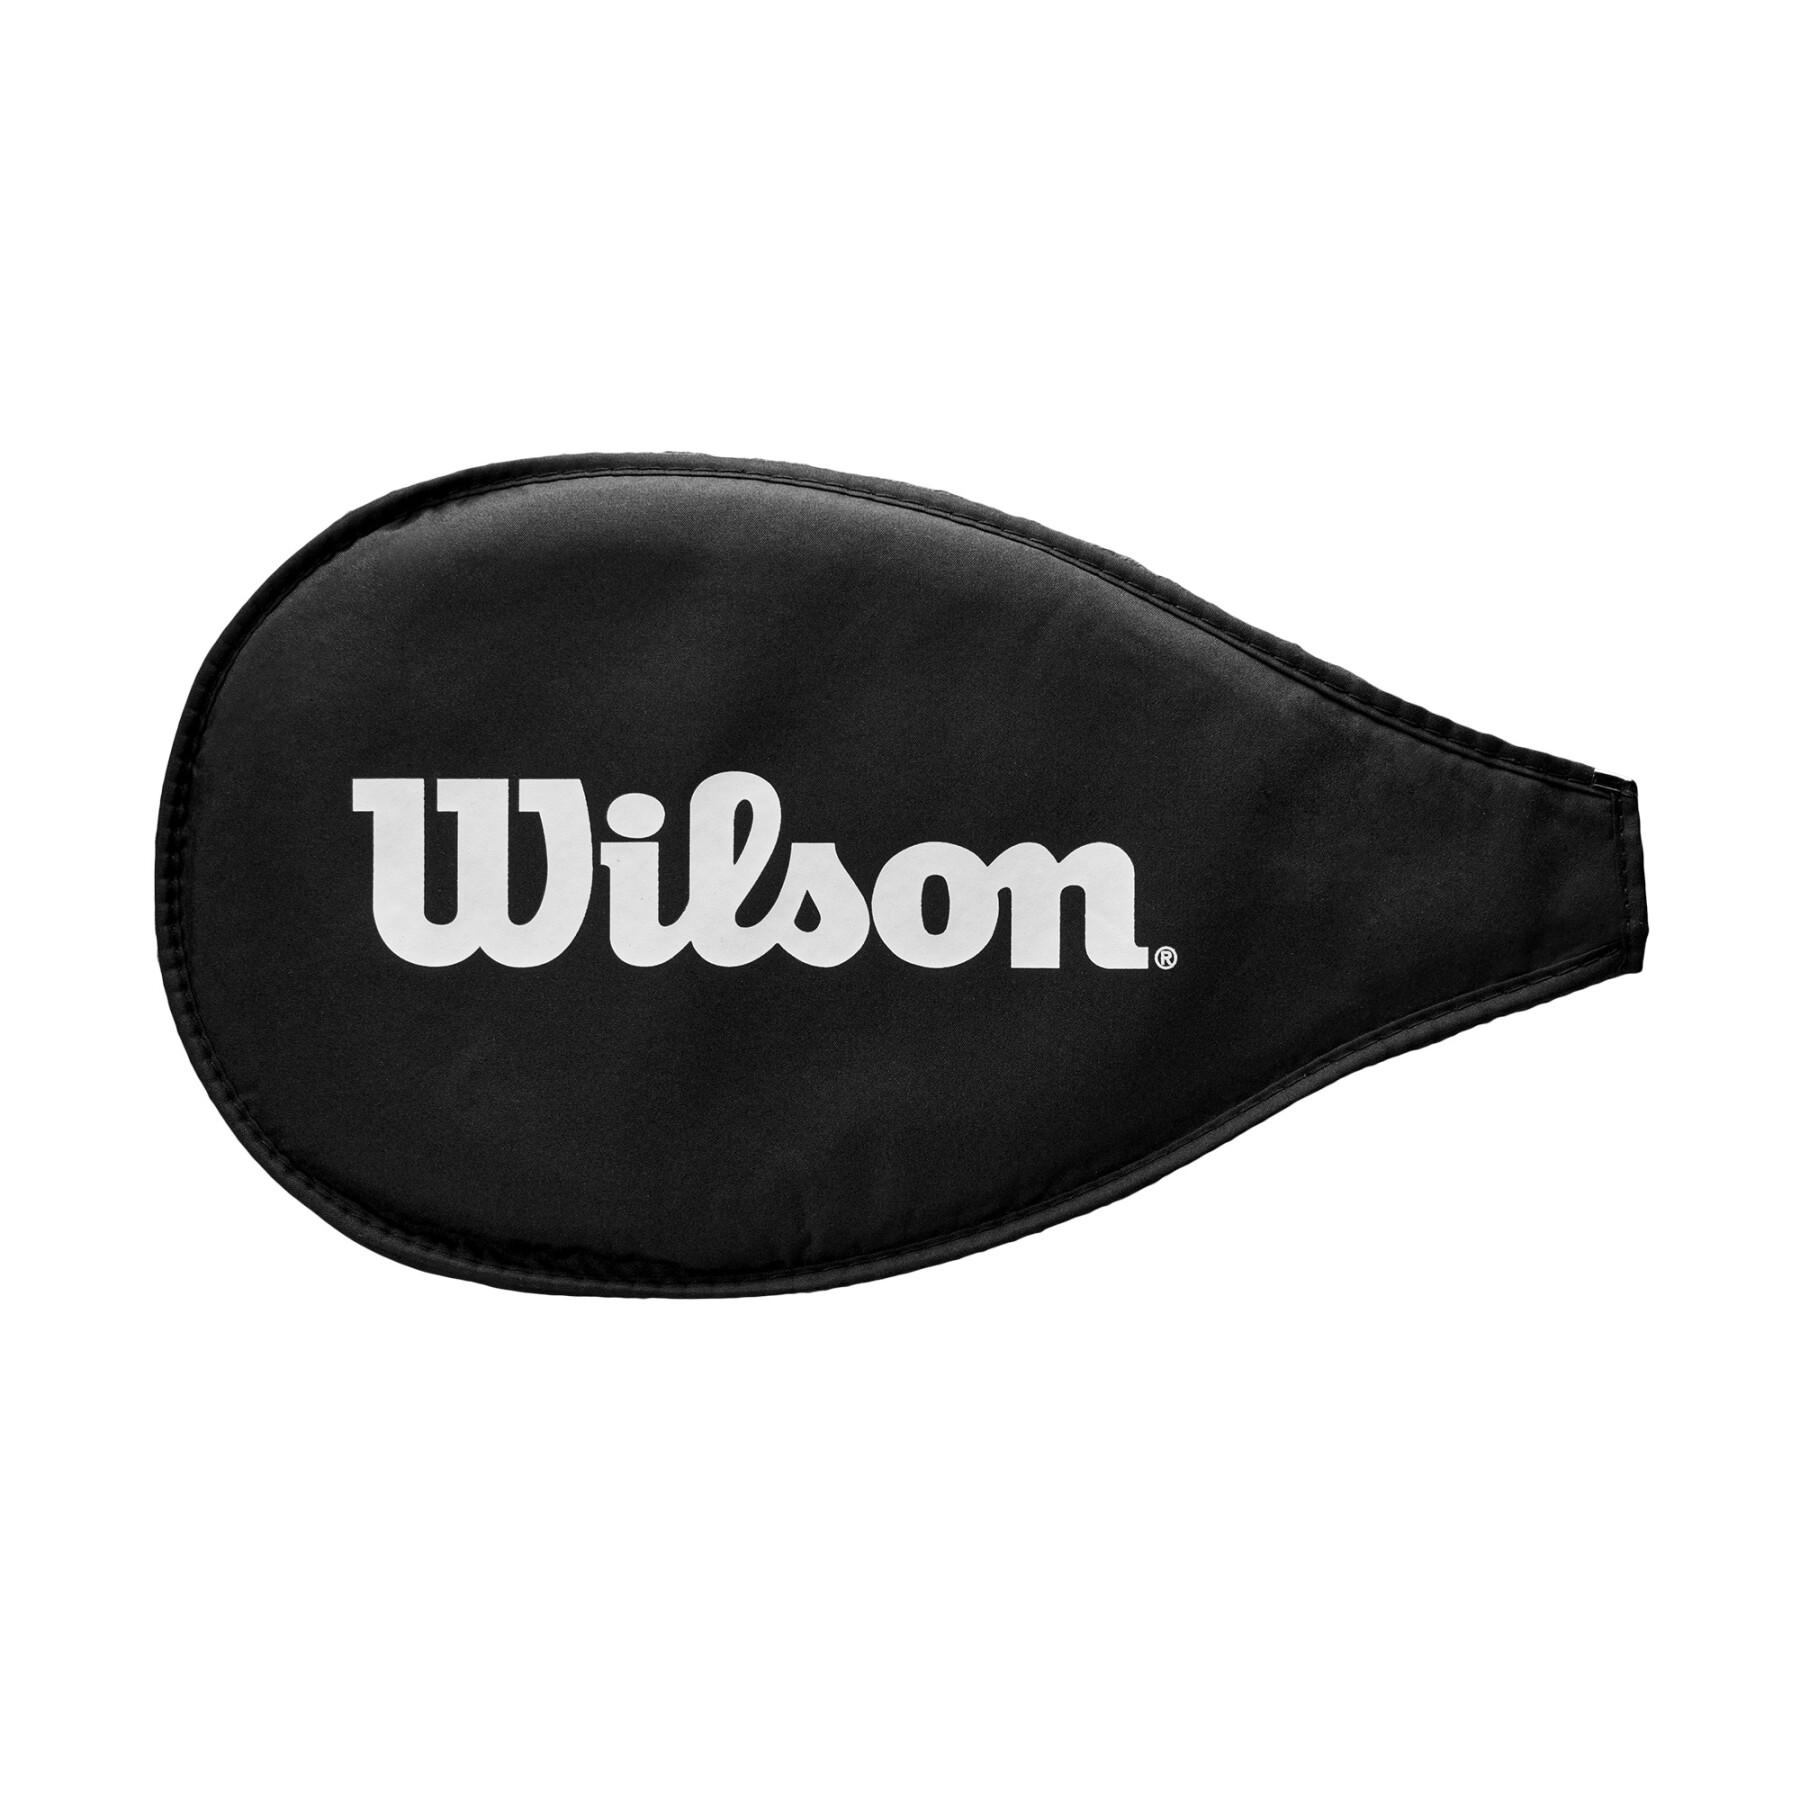 Squash racket Wilson Ultra L 21